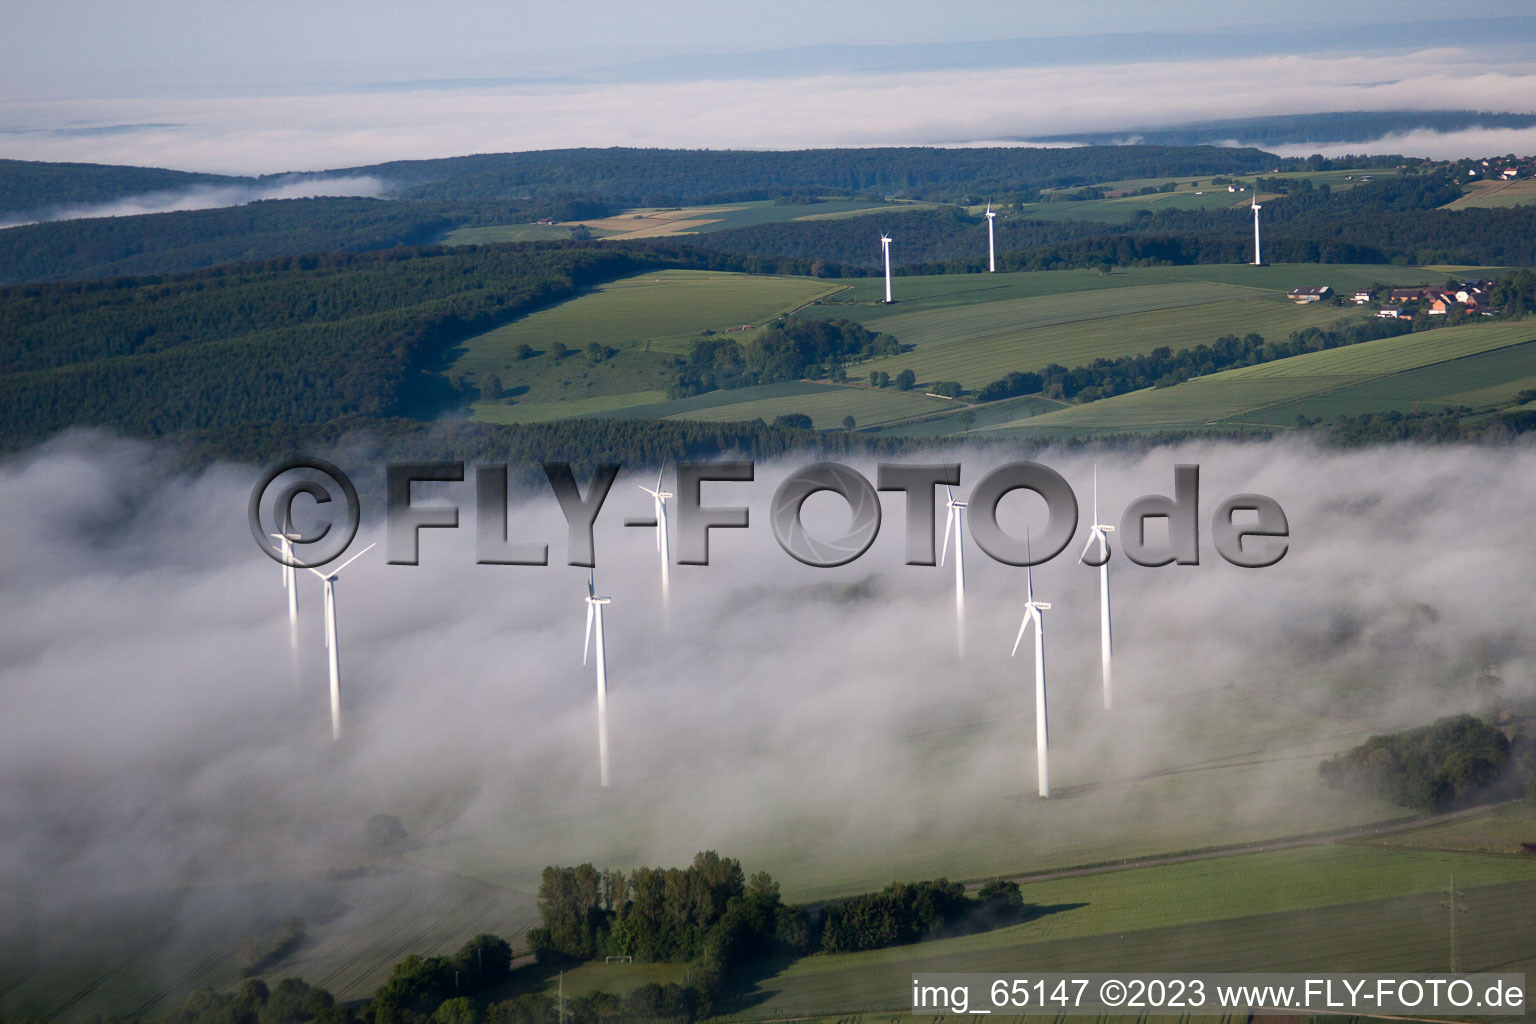 Aerial photograpy of Fürstenau in the state North Rhine-Westphalia, Germany